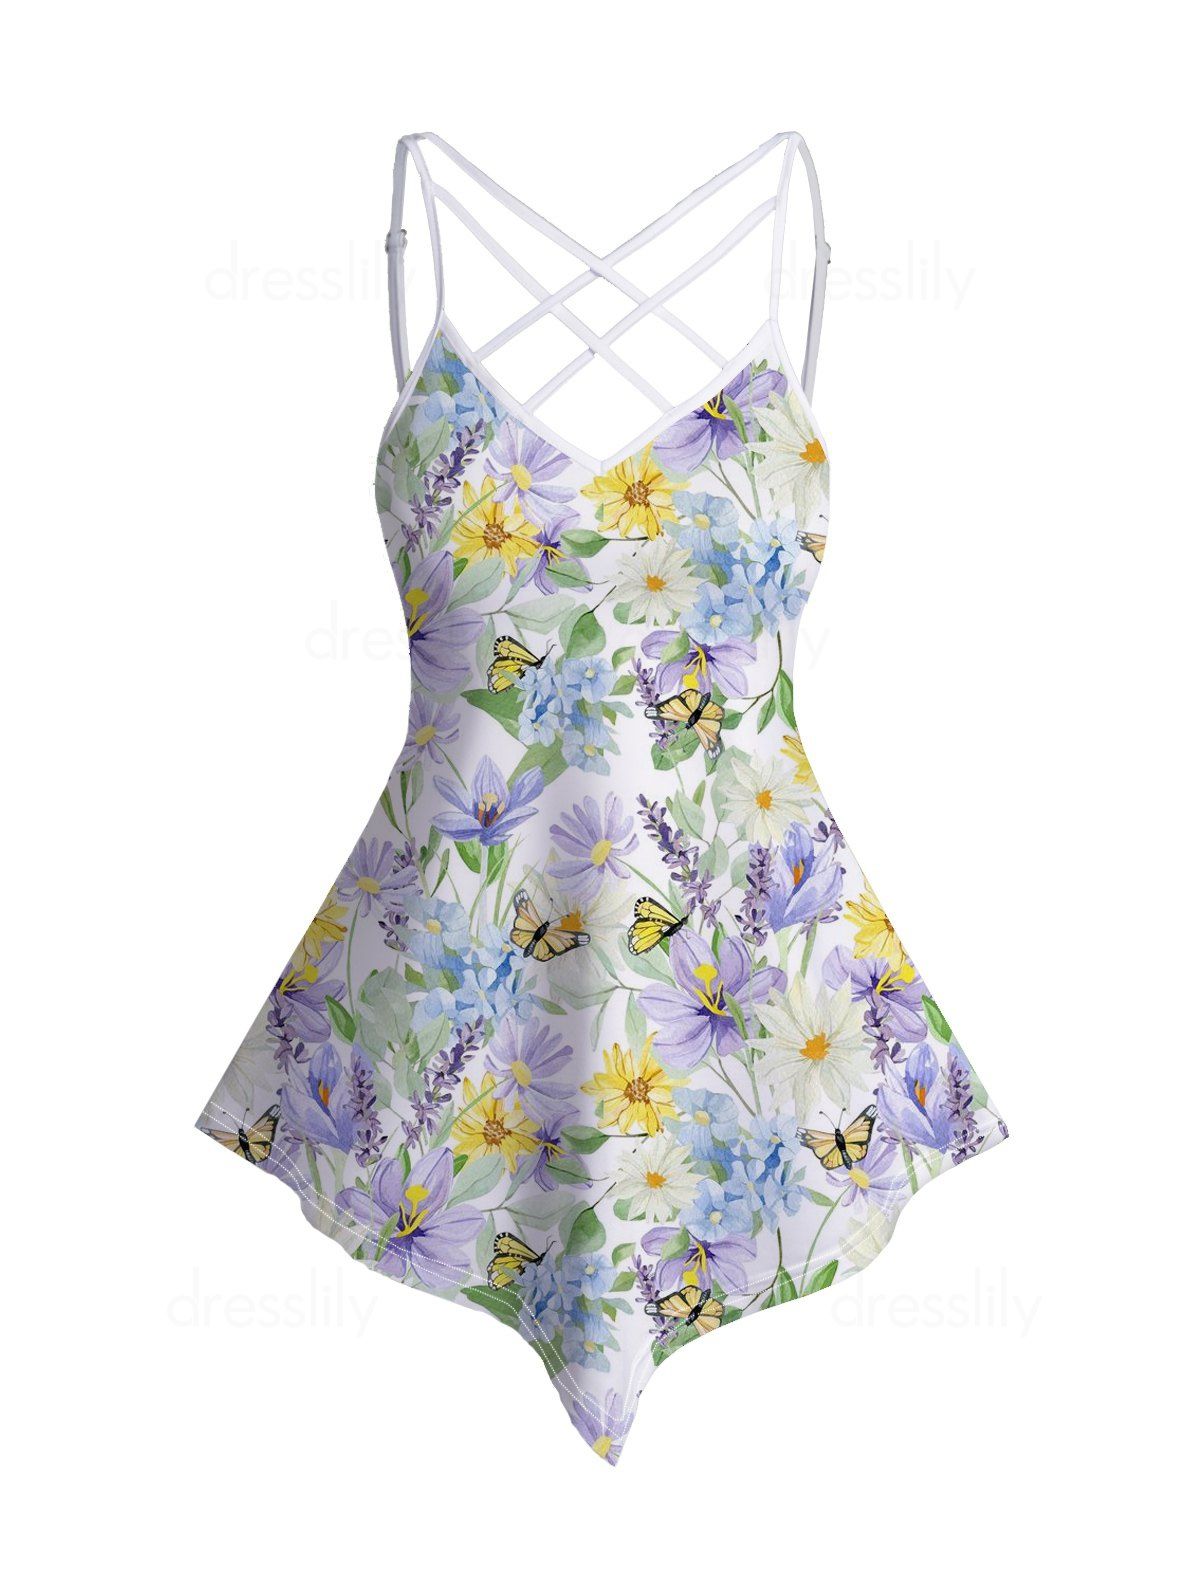 Dresslily Allover Floral Print Asymmetrical Camisole Adjustable Spaghetti Straps Crisscross Tank Top